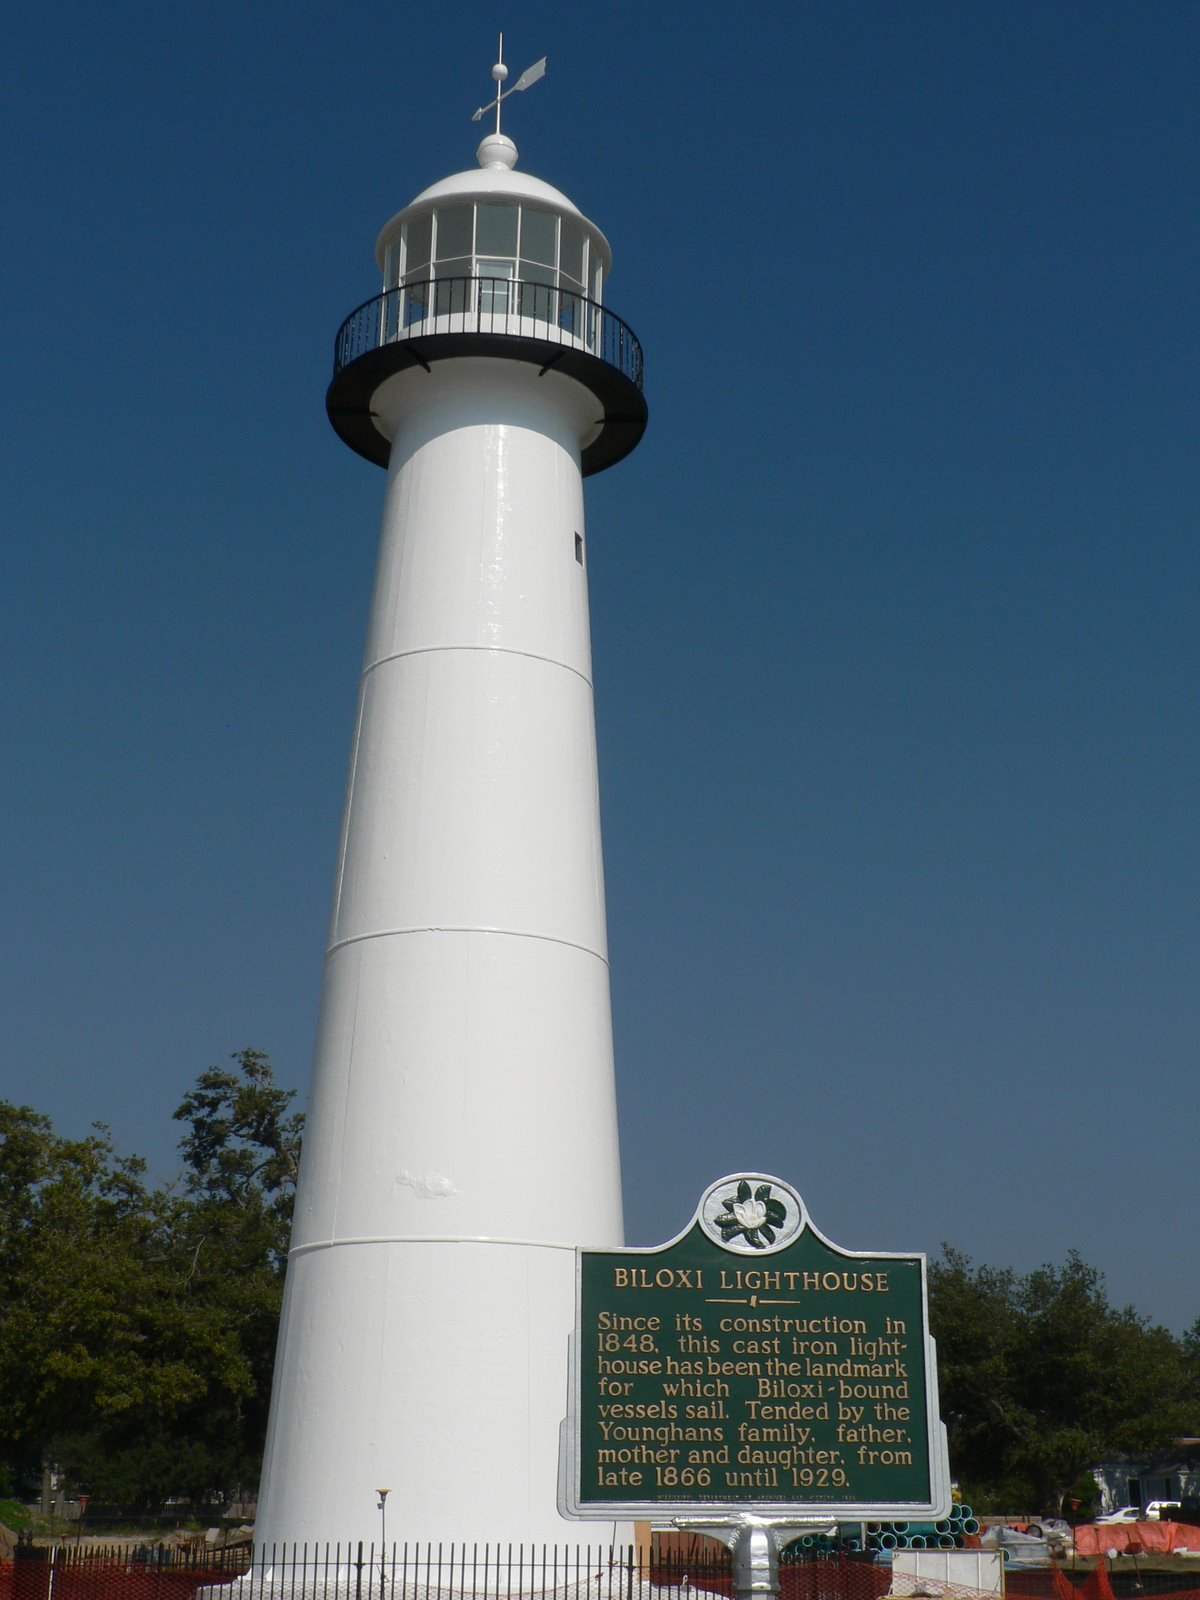 Biloxi Lighthouse In Mississippi – Biloxi Lighthouse Tours & History